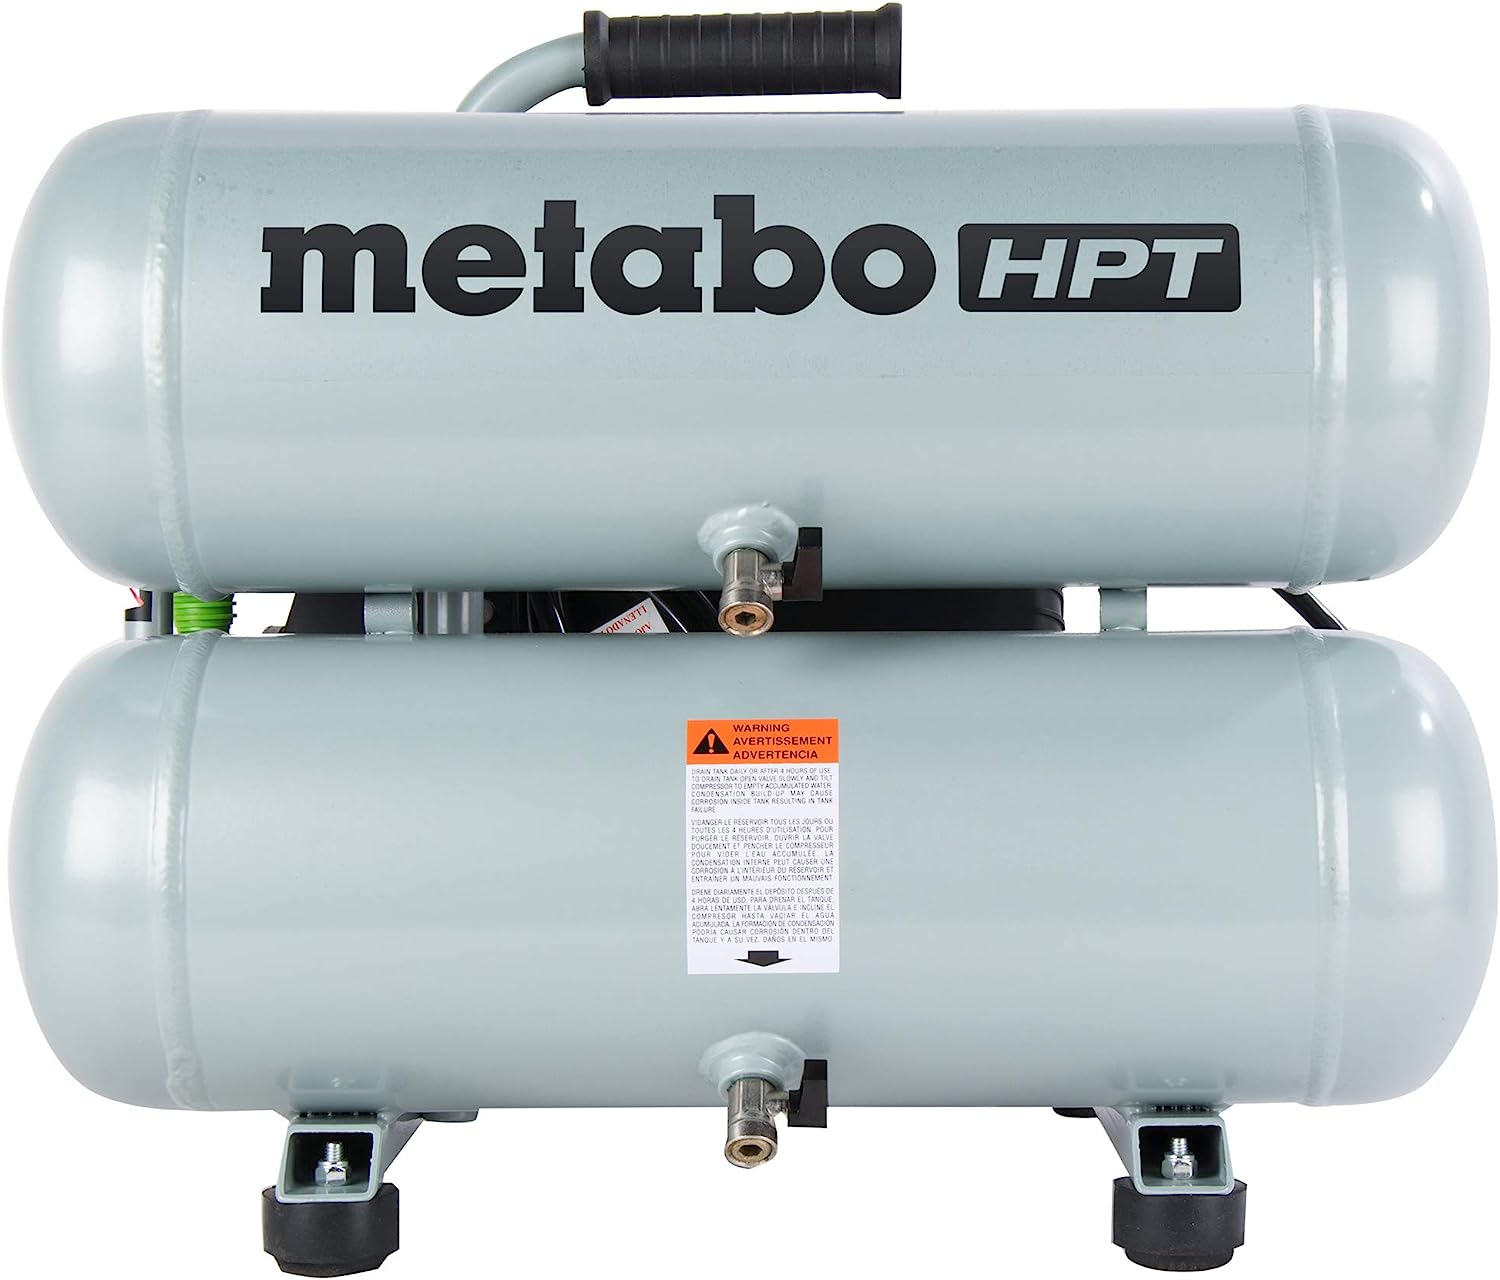 Metabo HPT Air Compressor, 4 Gallon, Electric, Twin [...]